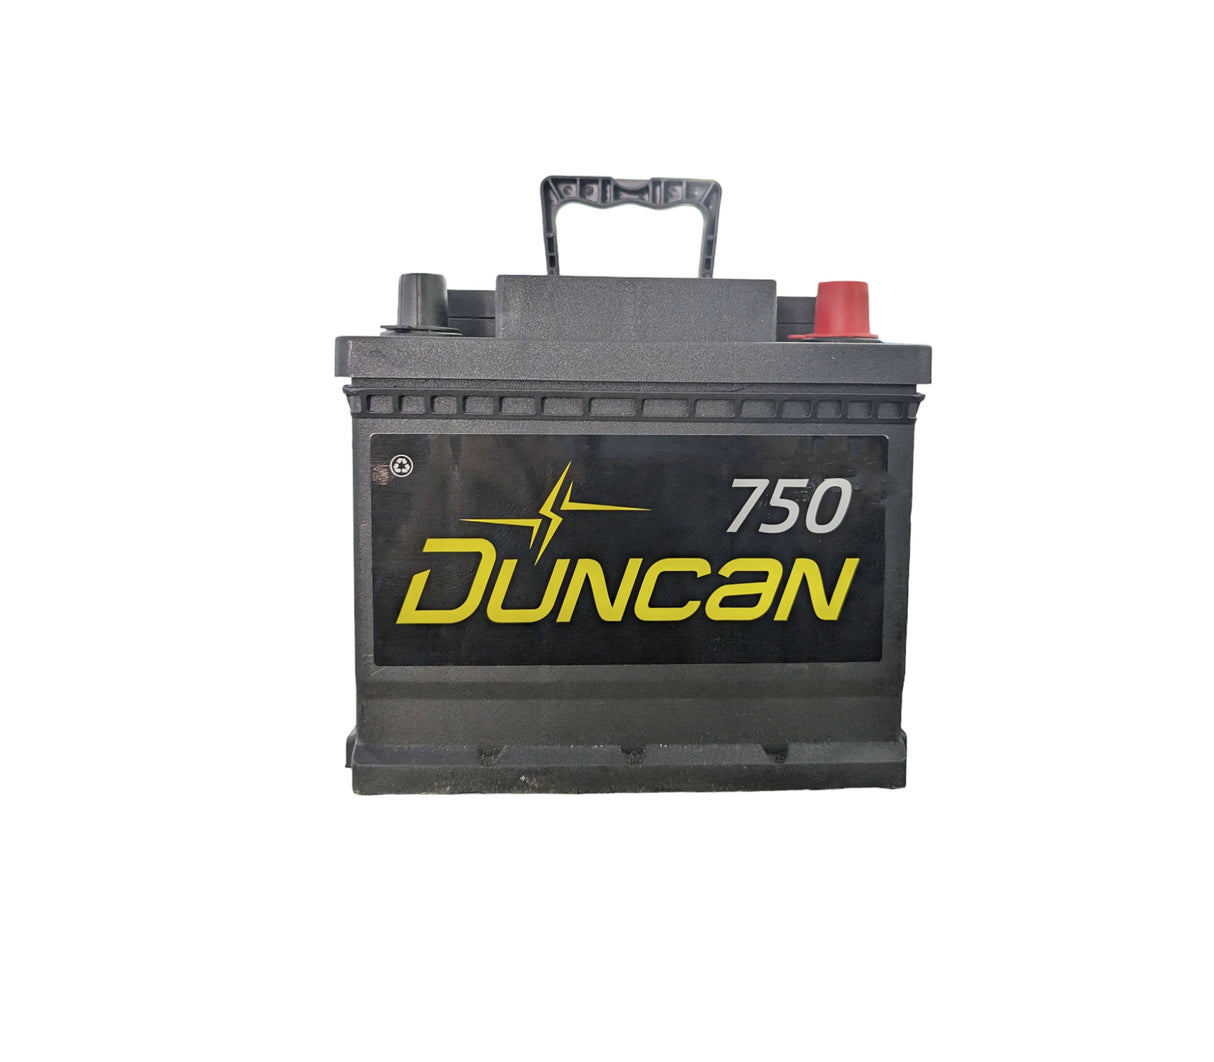 Bateria de vehículo D36R-750 Duncan